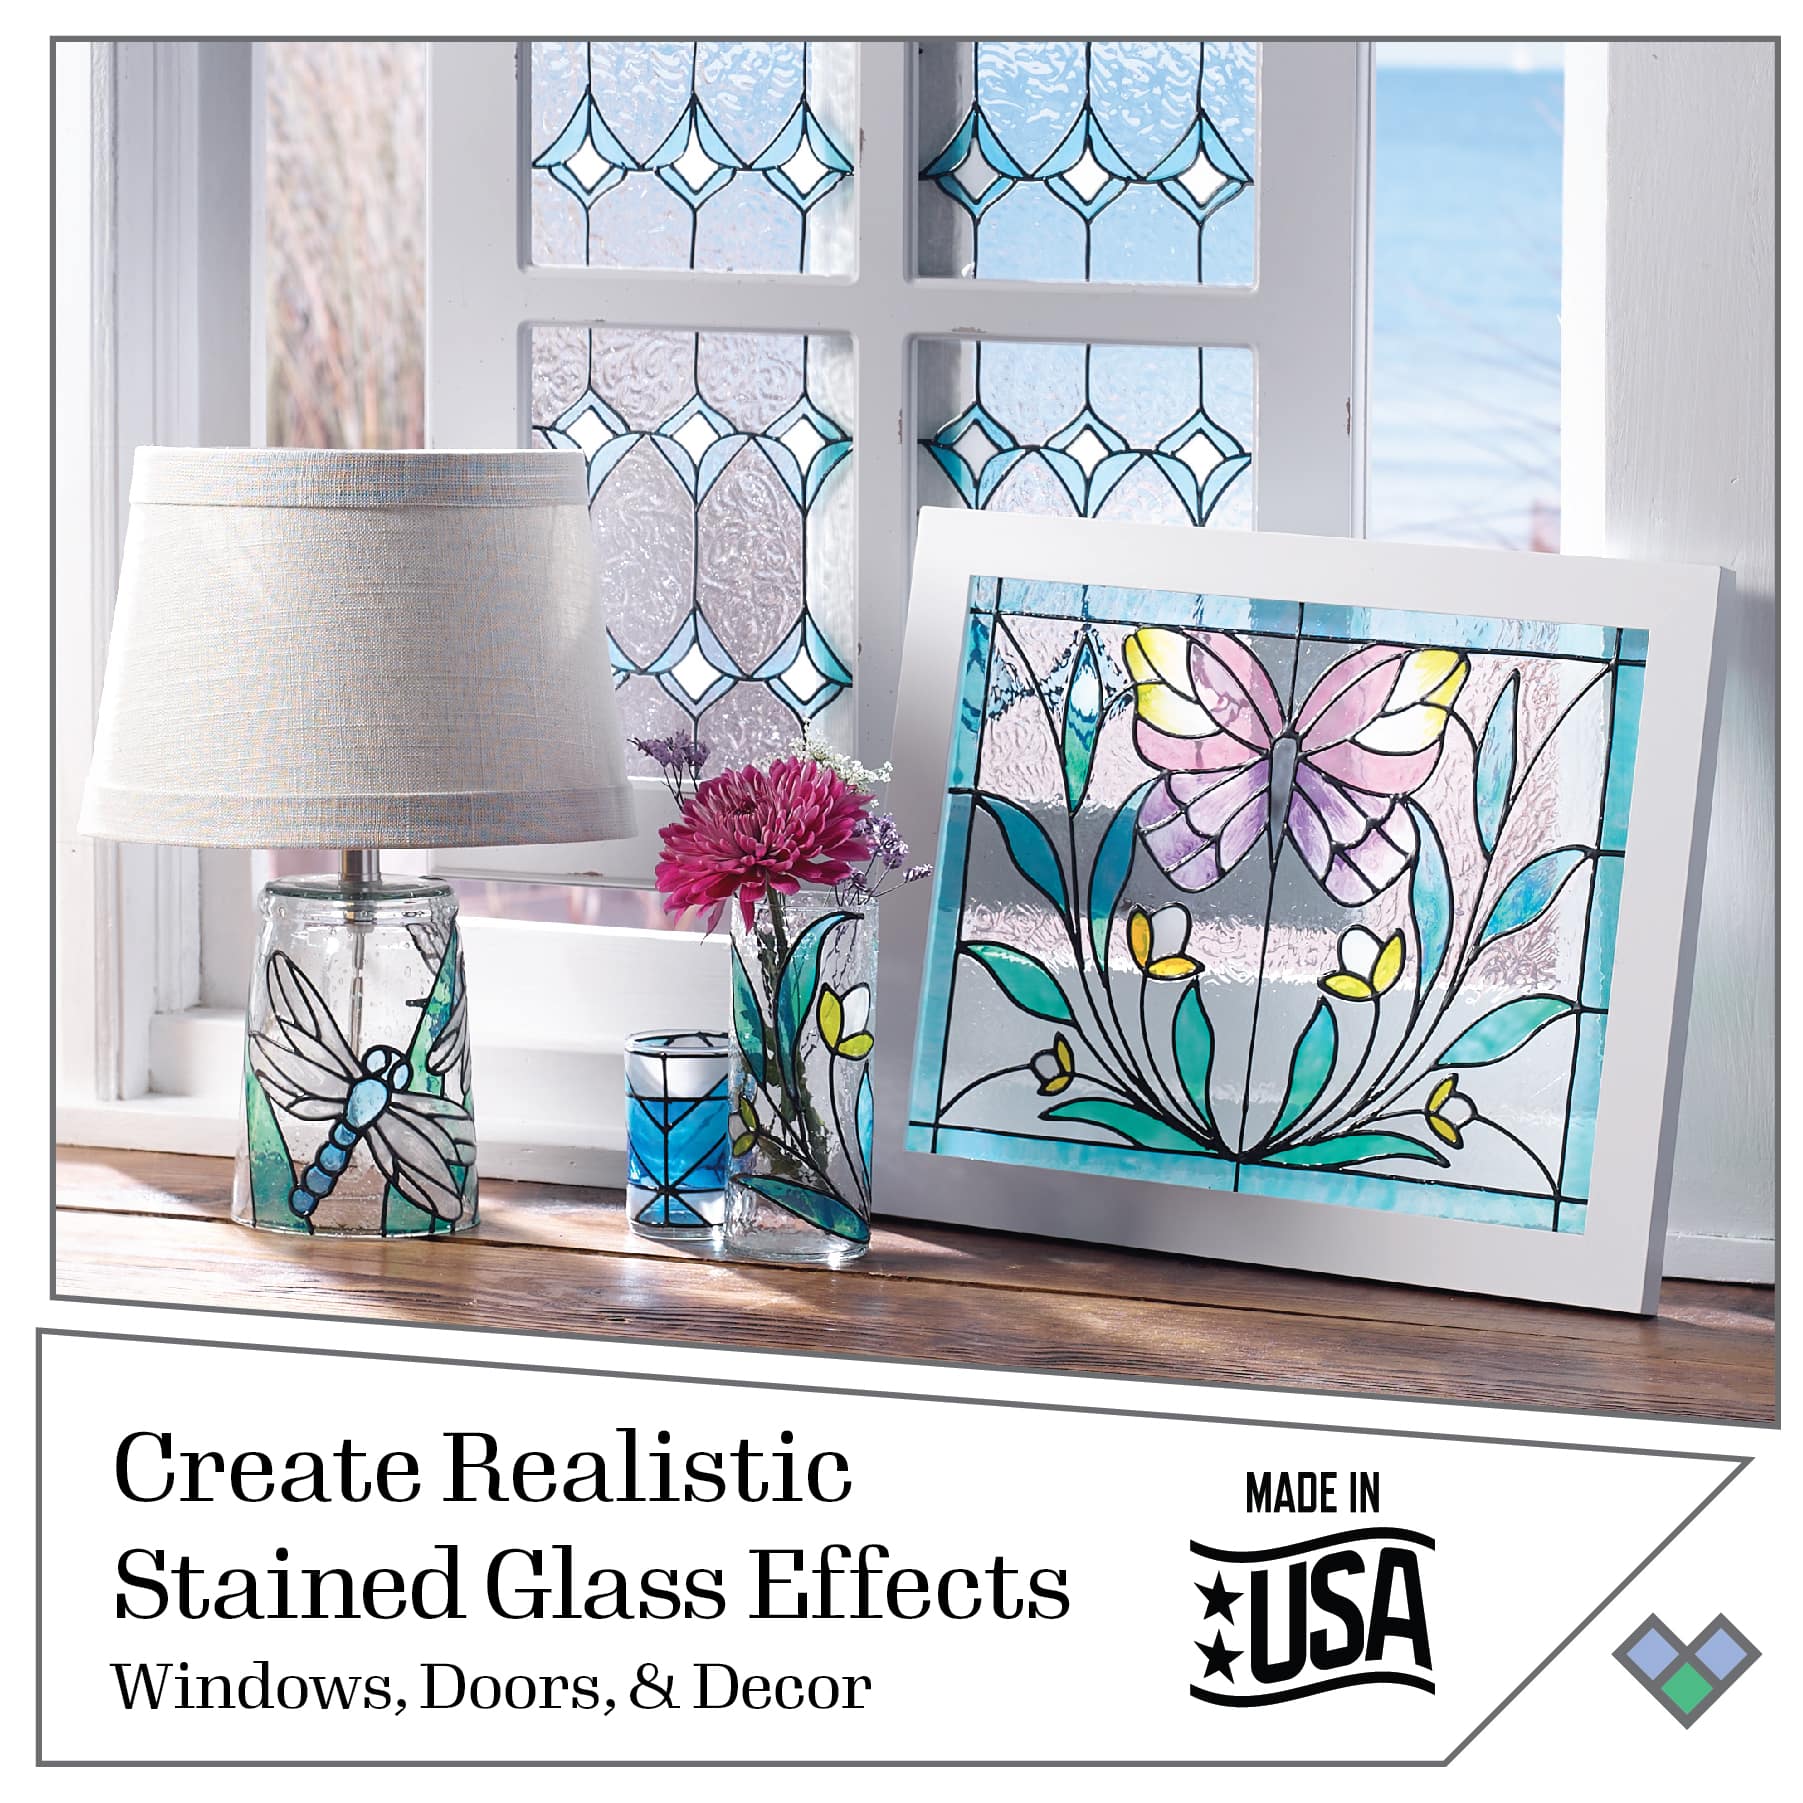 Plaid Gallery Glass Window Color Acrylic Paint Set 2-Ounce PROMOGGII Best Colors